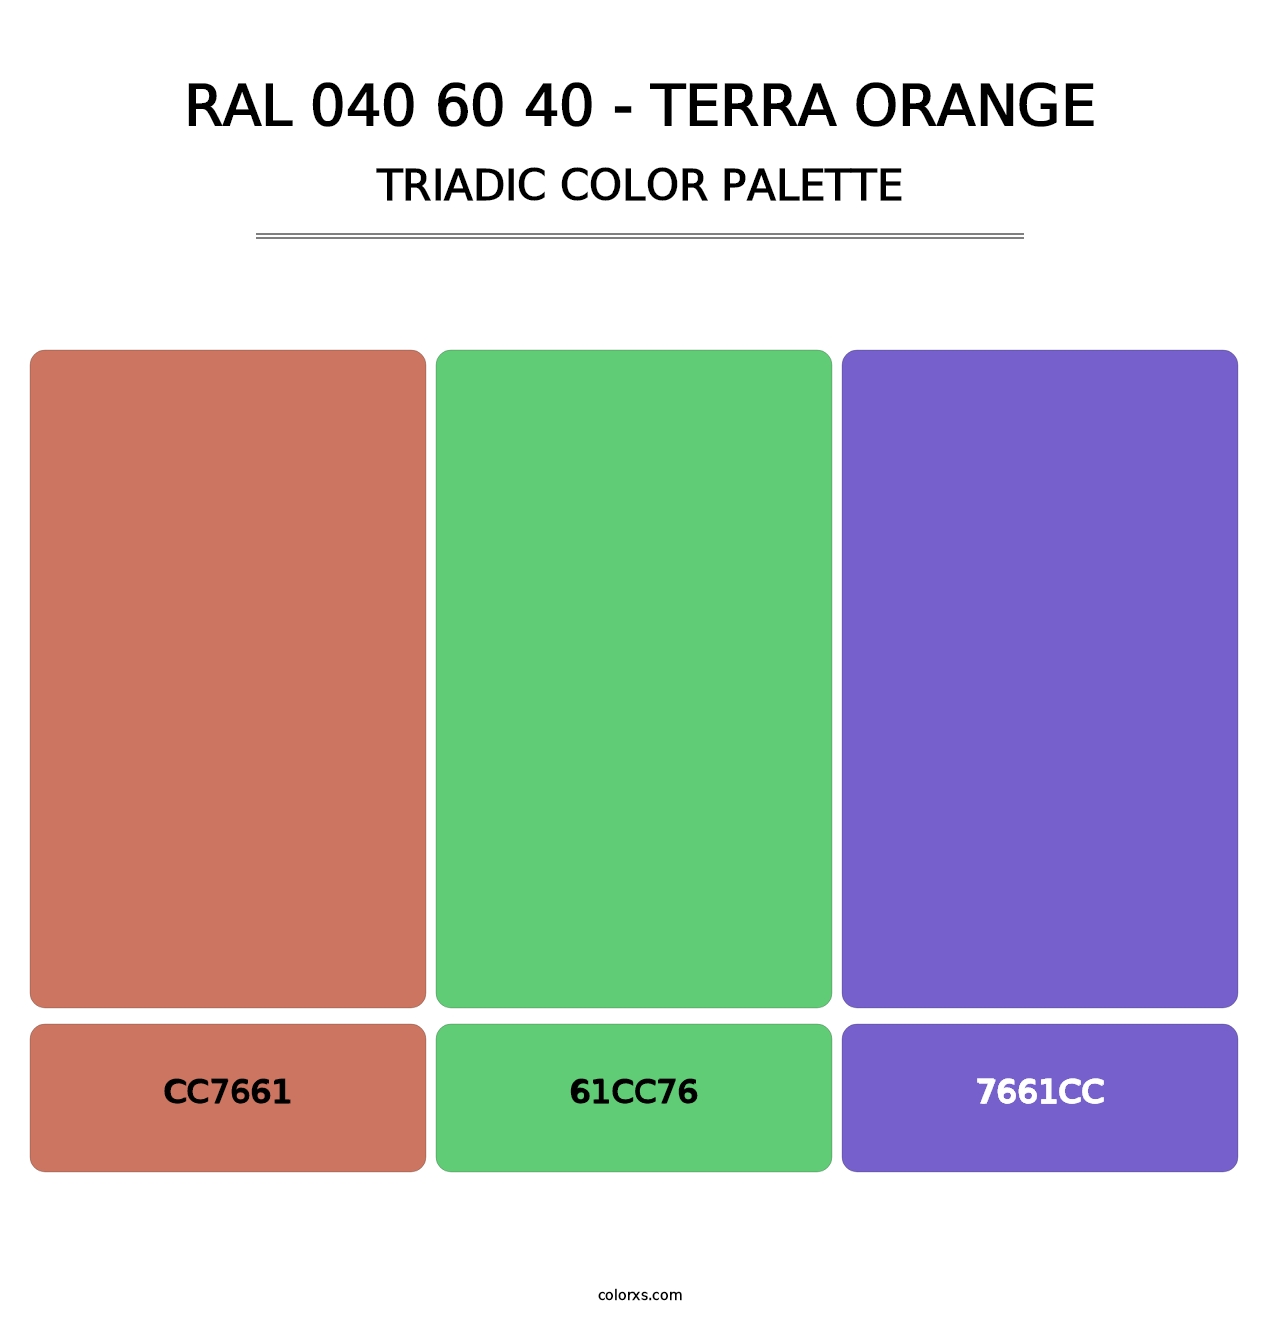 RAL 040 60 40 - Terra Orange - Triadic Color Palette